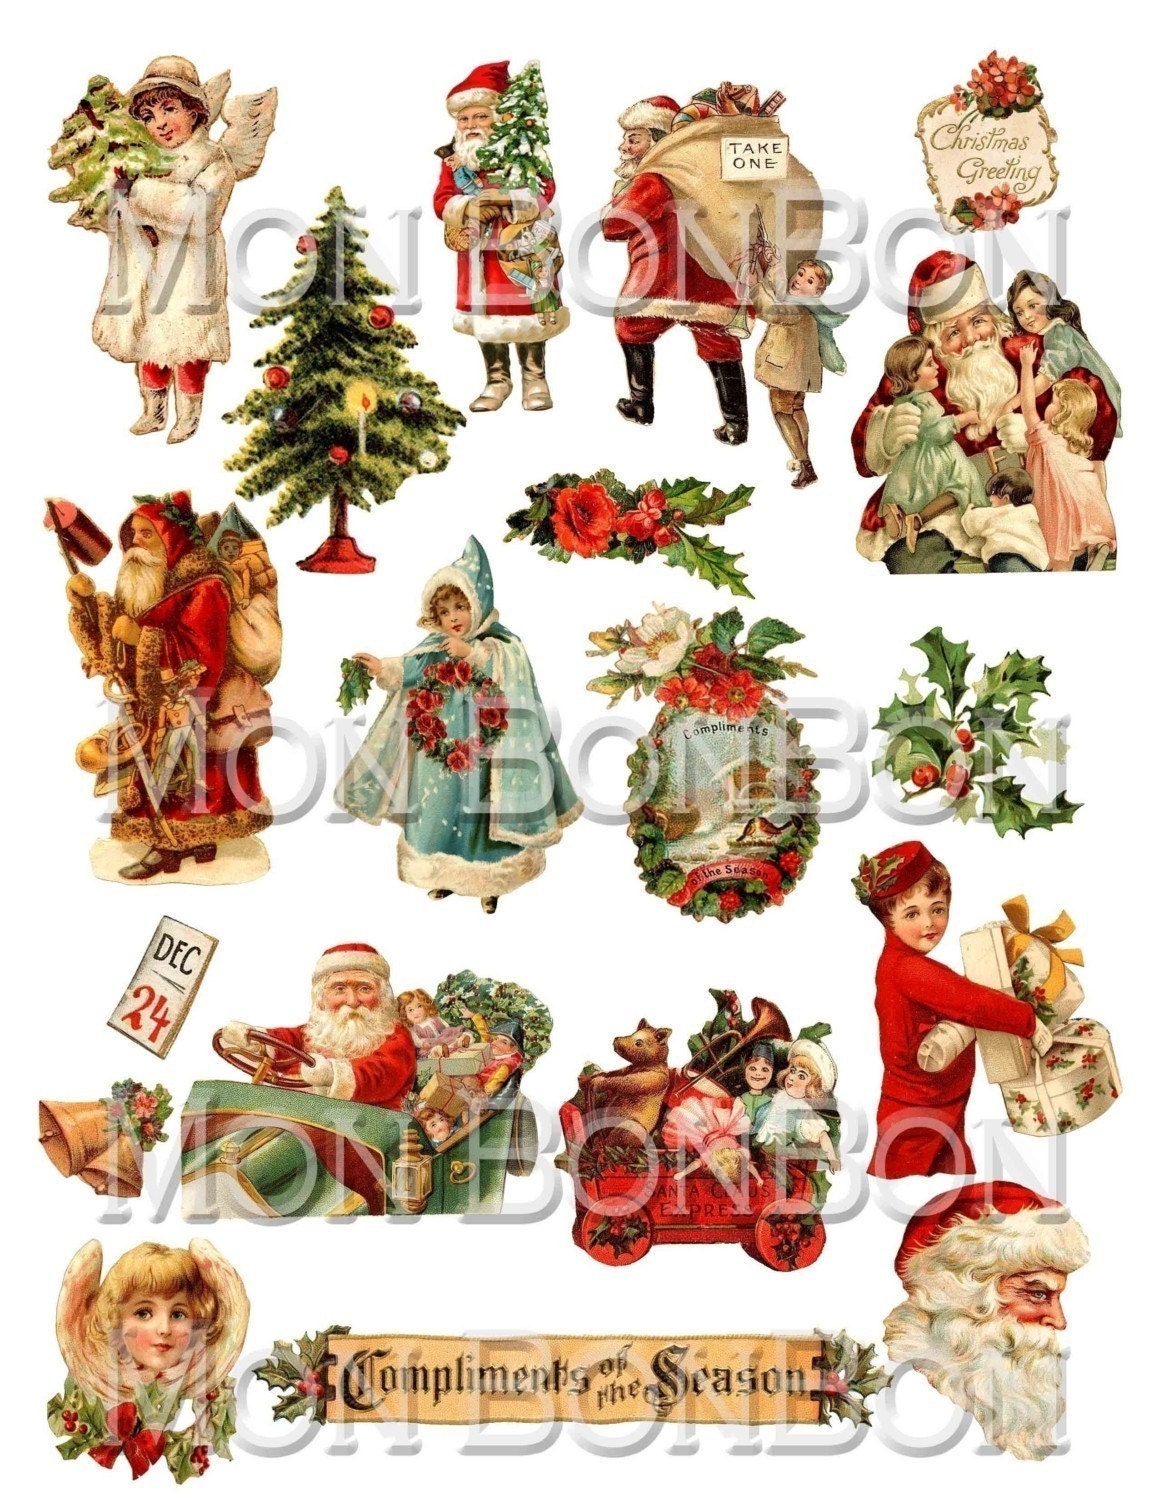 Digital Download of 19vintage Christmas Images Collage Sheet - Etsy